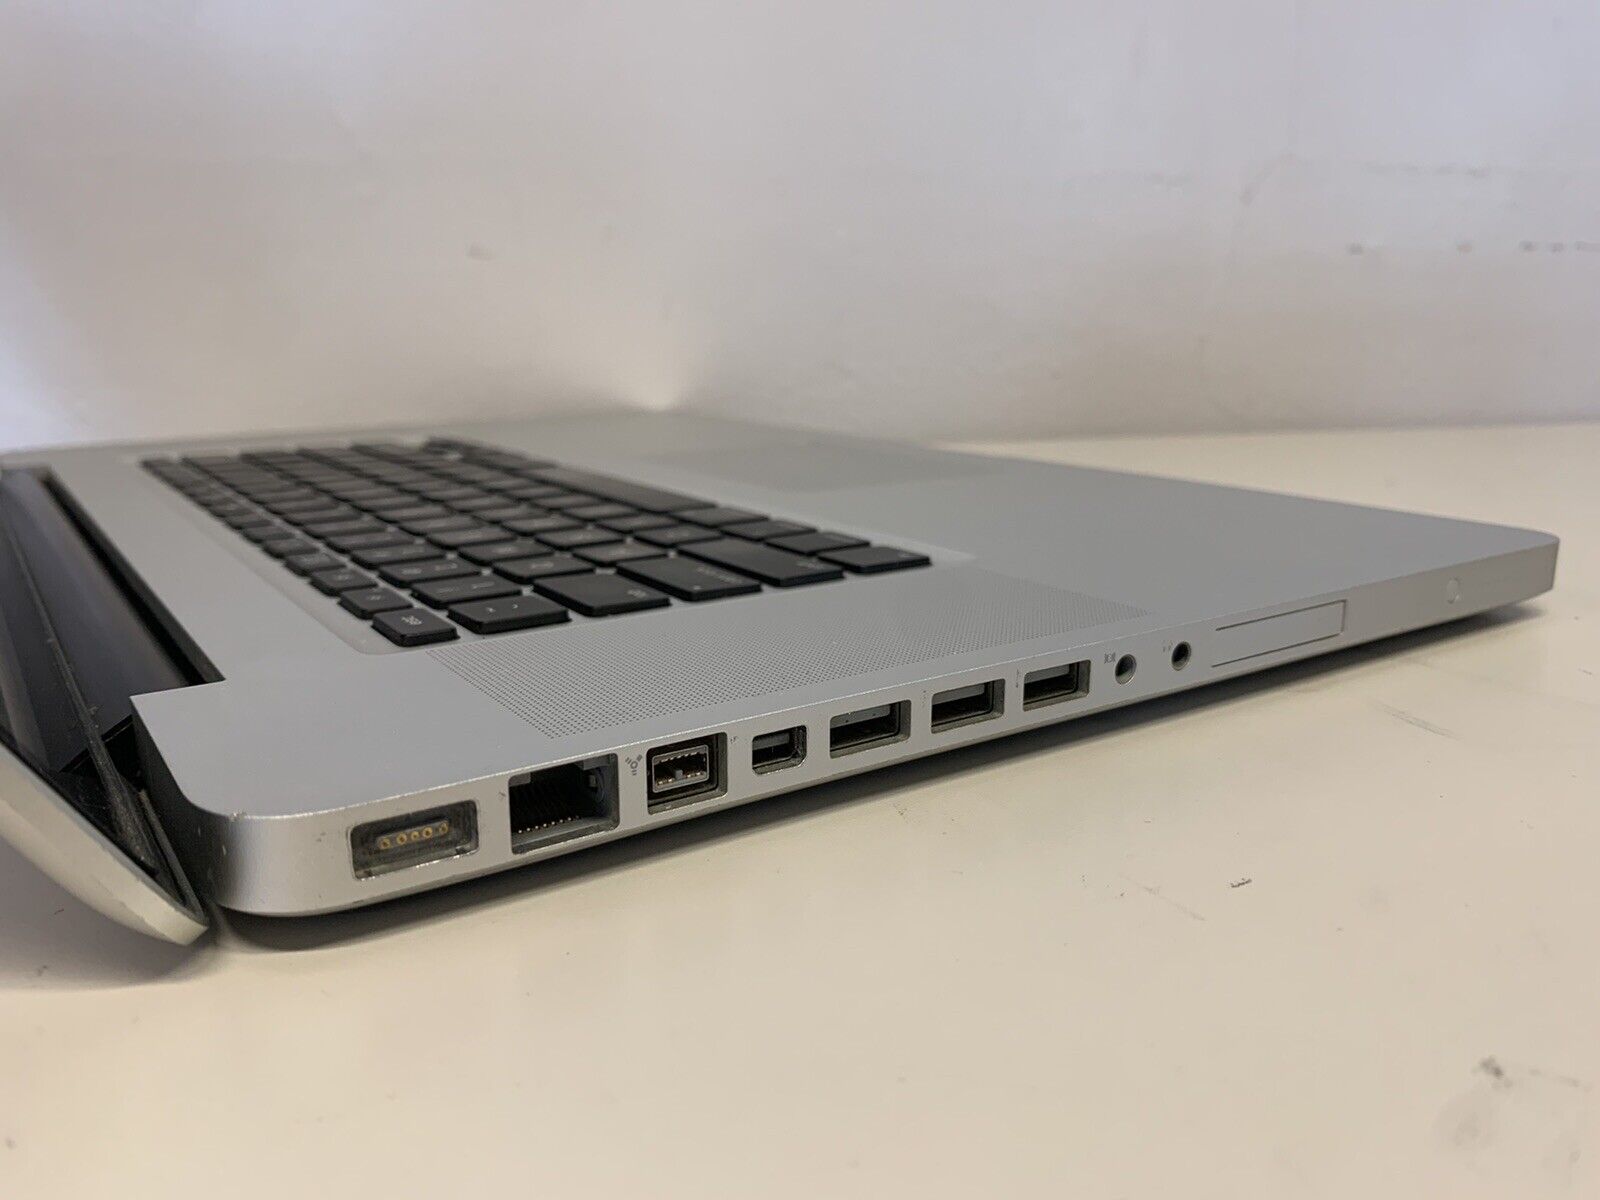 Apple Macbook Pro 17-Inch Core i5 2.53Ghz Mid-2010 Works Great Good GPU 4GB  RAM